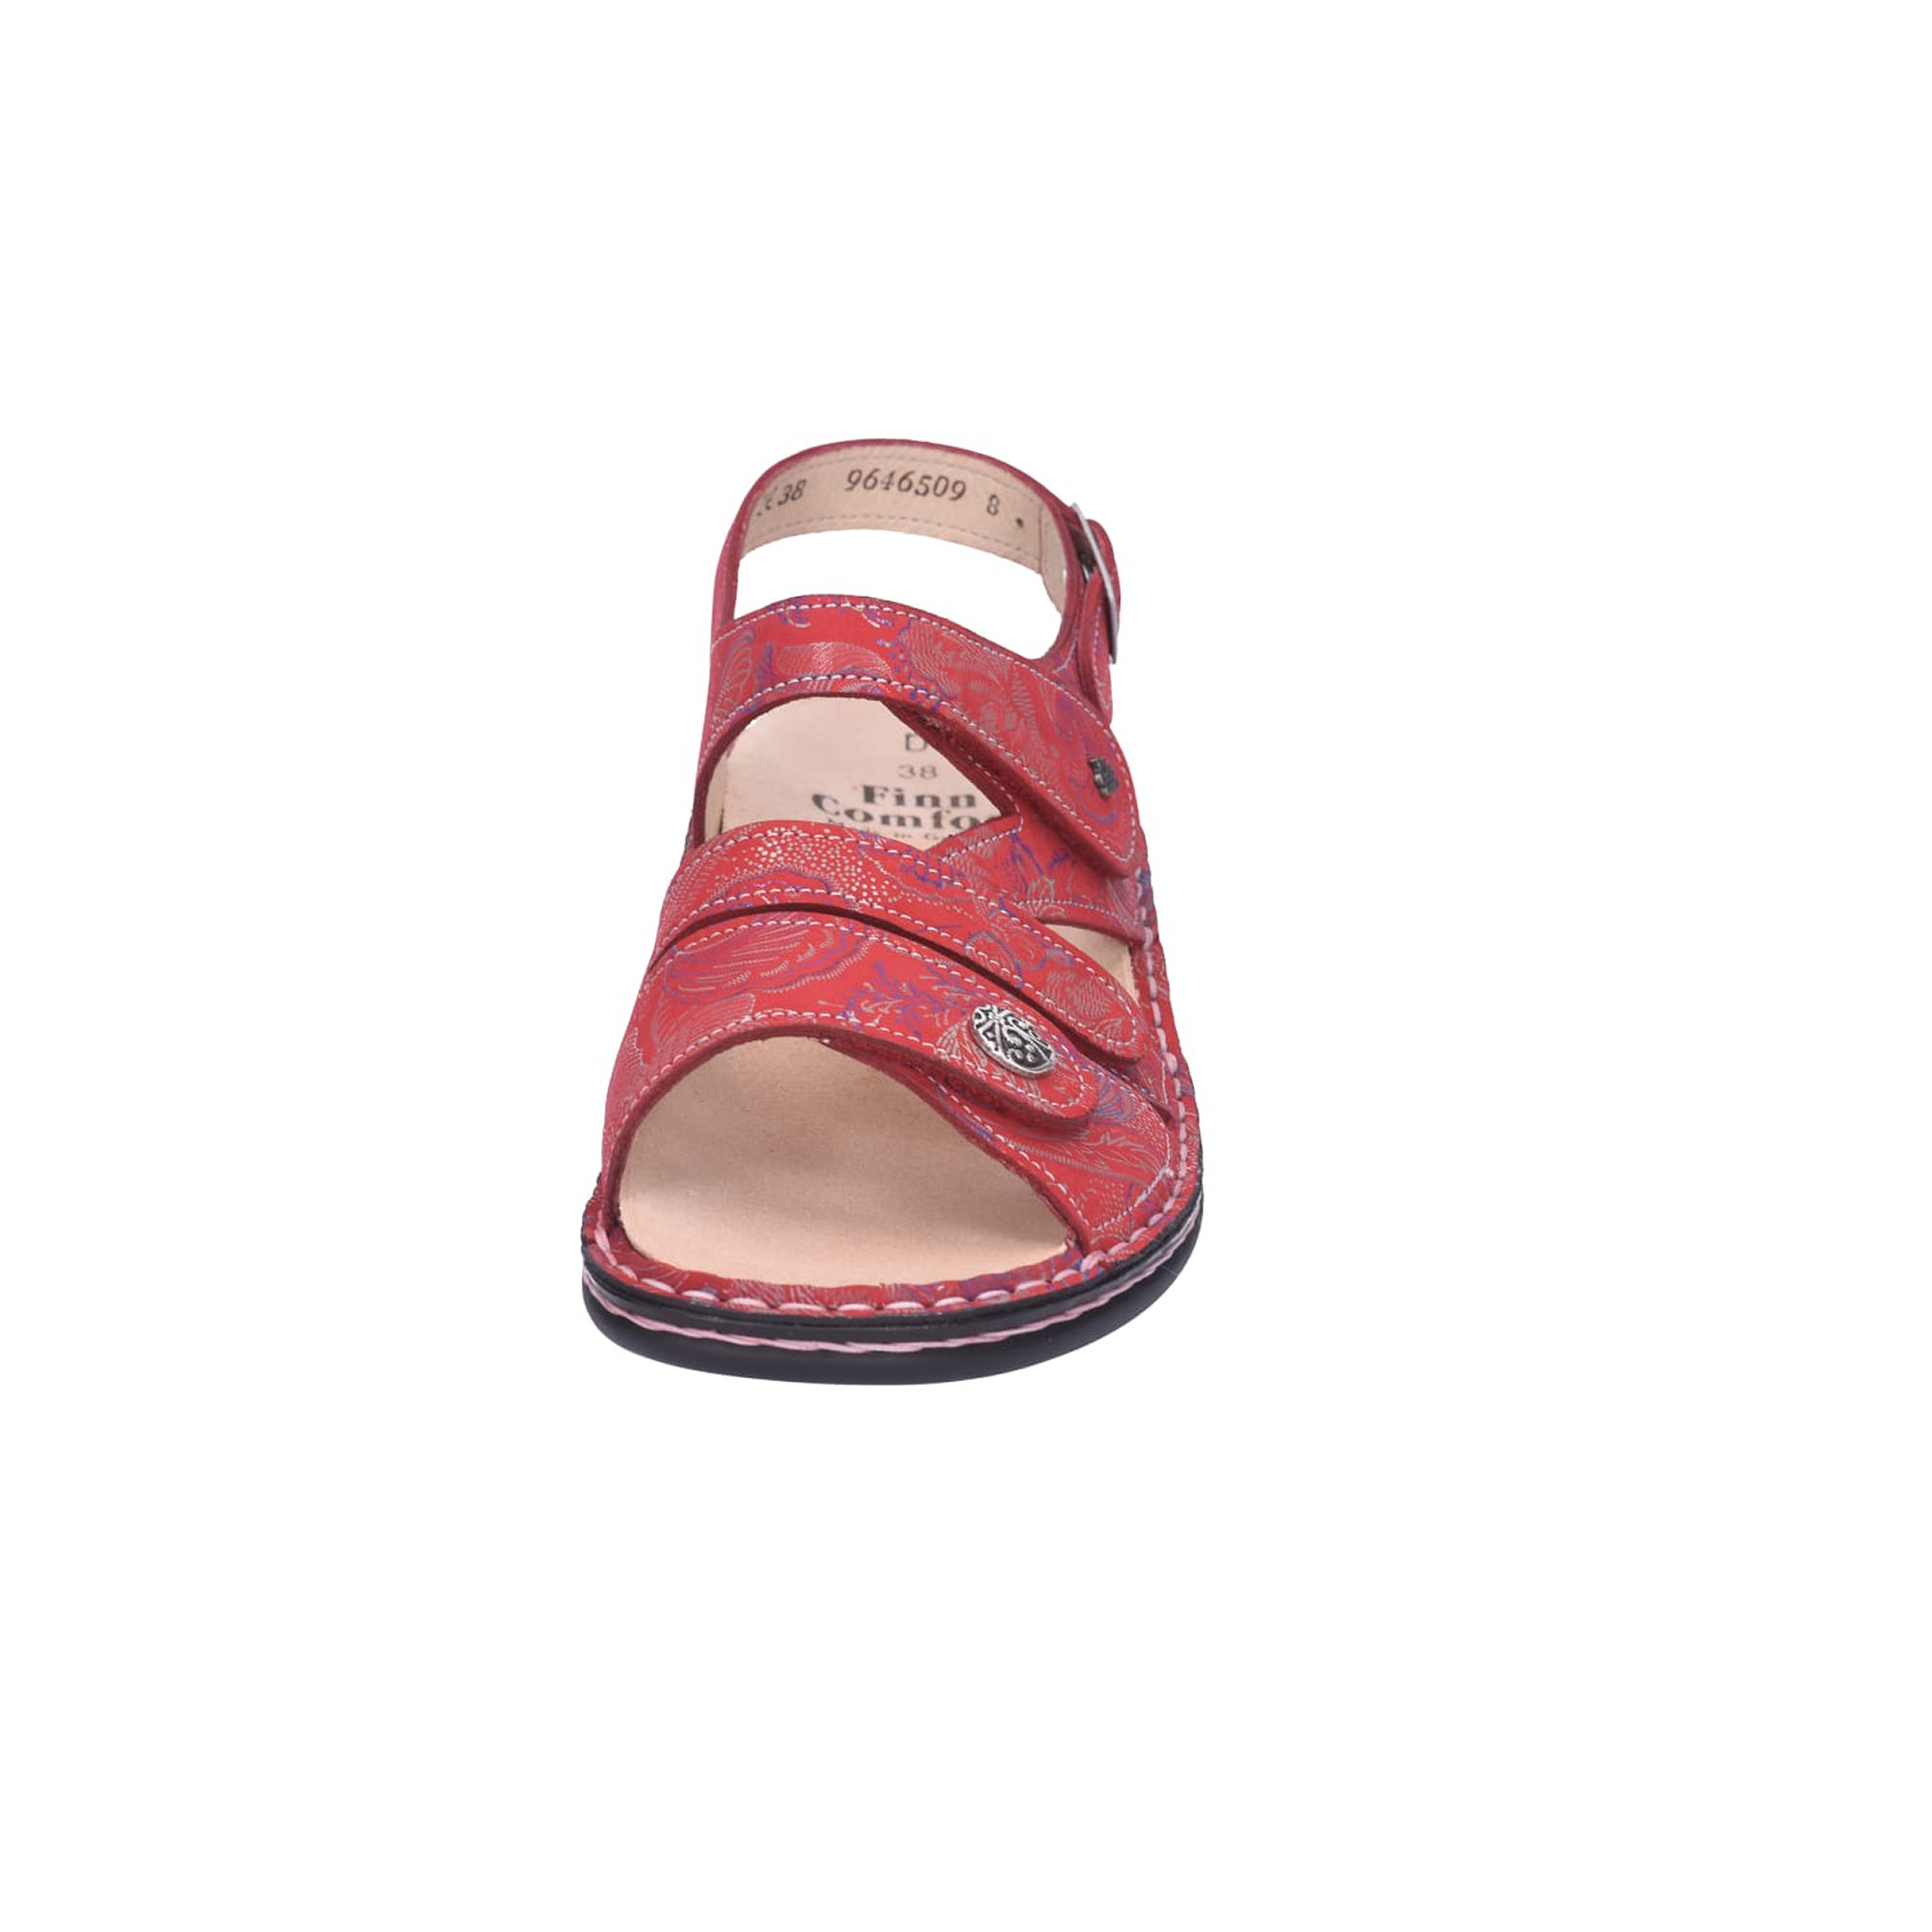 Finn Comfort Gomera Women's Red Sandals - Stylish & Comfortable